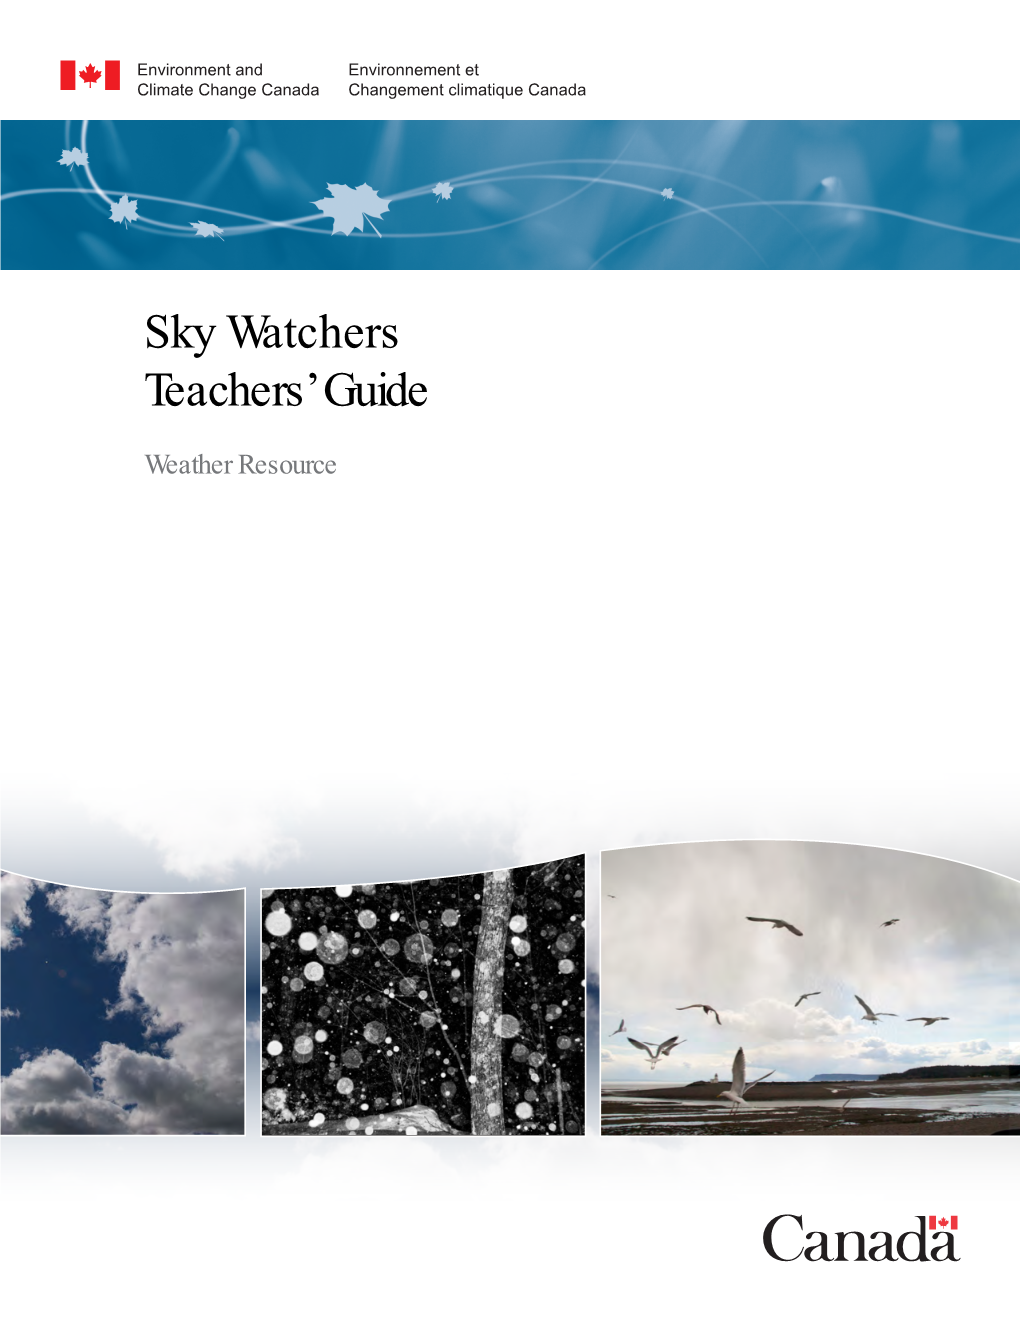 Sky Watchers Teachers' Guide